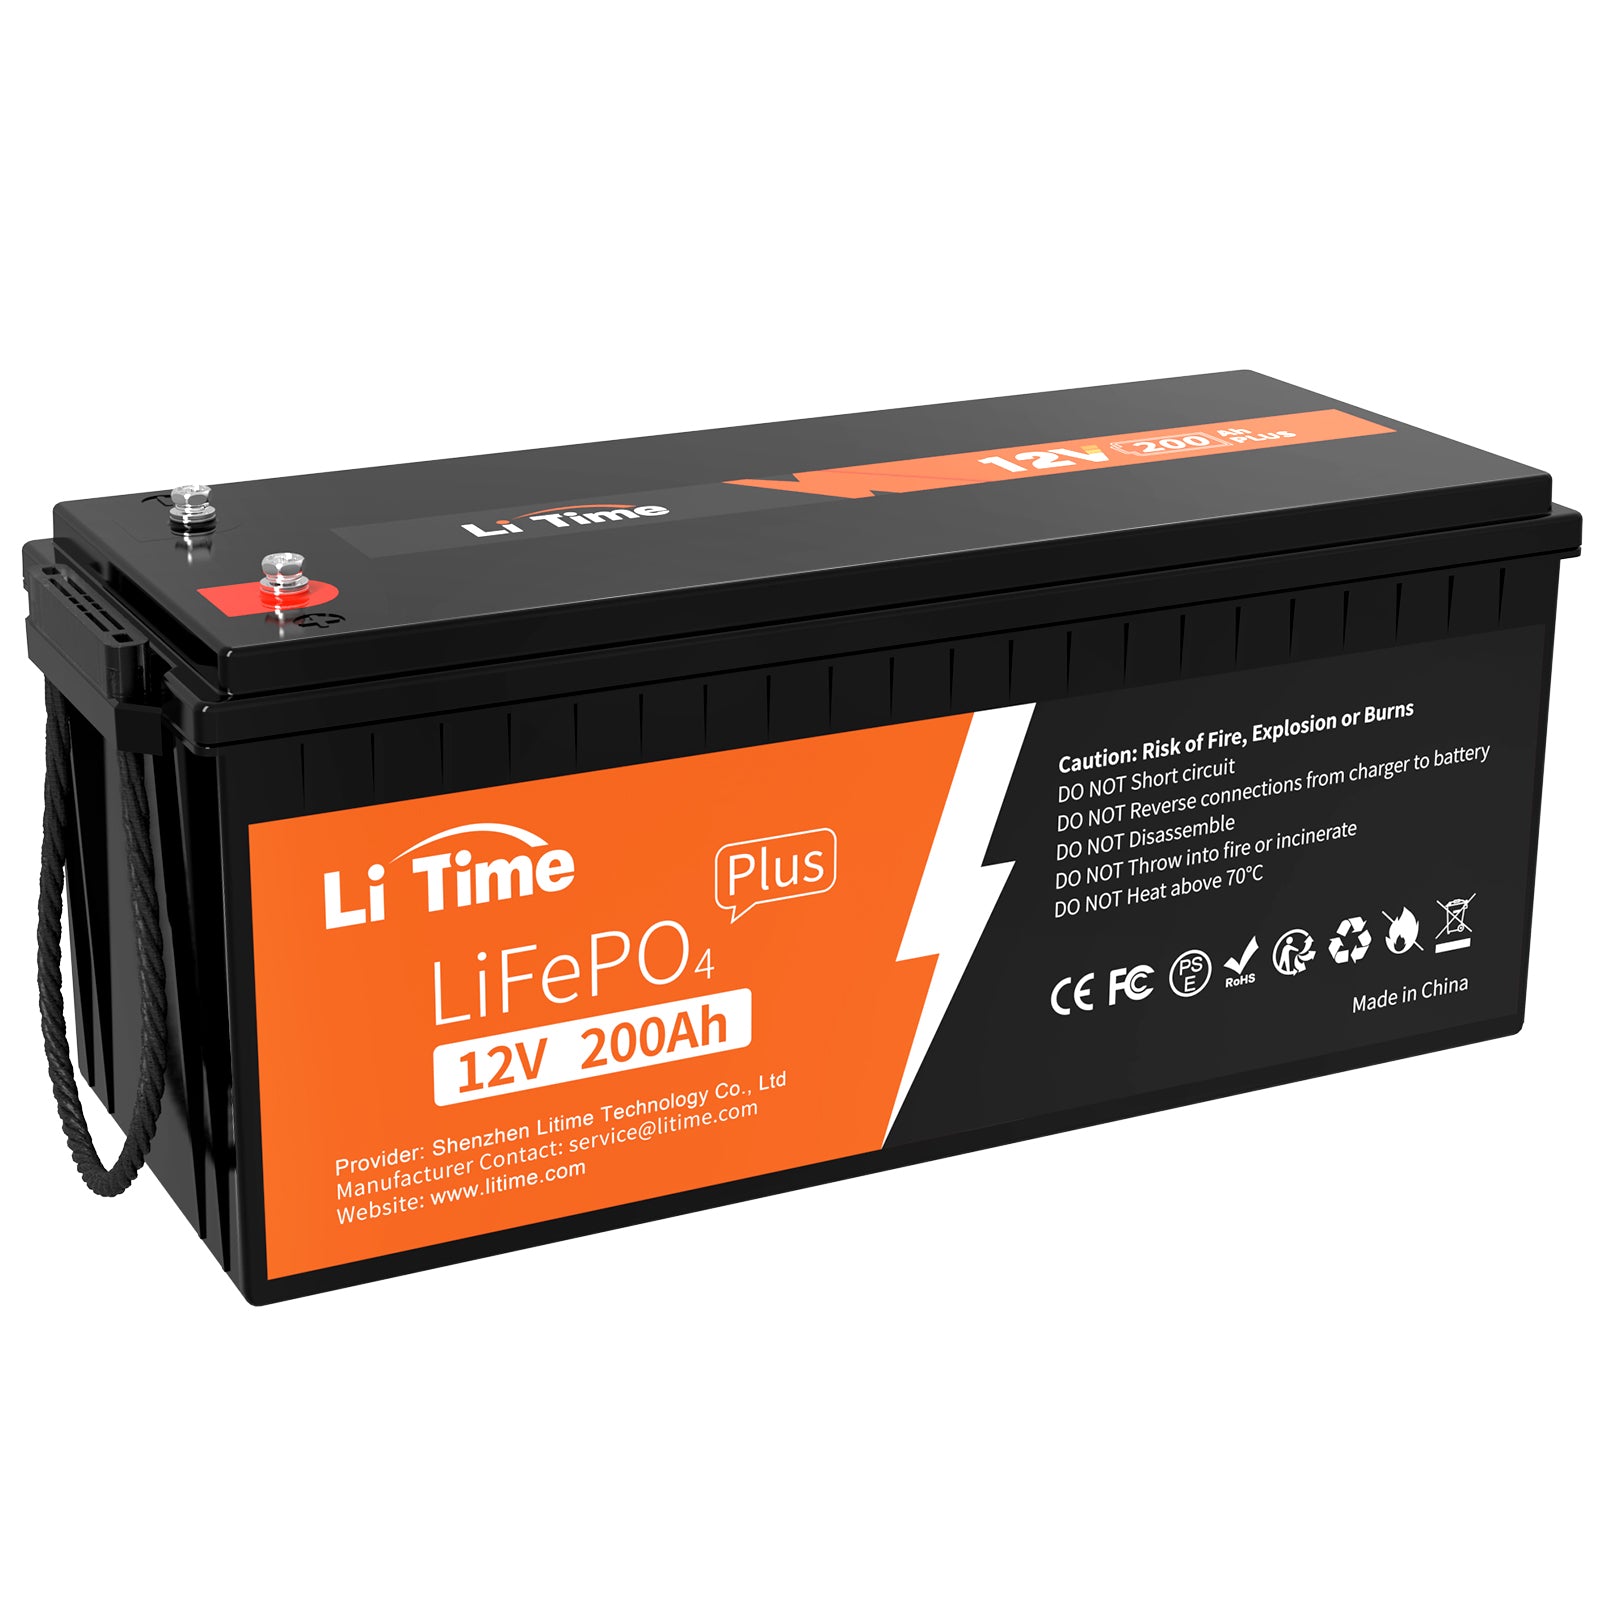 LiTime 12V 200Ah Plus LiFePO4 リン酸鉄リチウムイオンバッテリー 内蔵200A BMS - 1個 12v 200plus